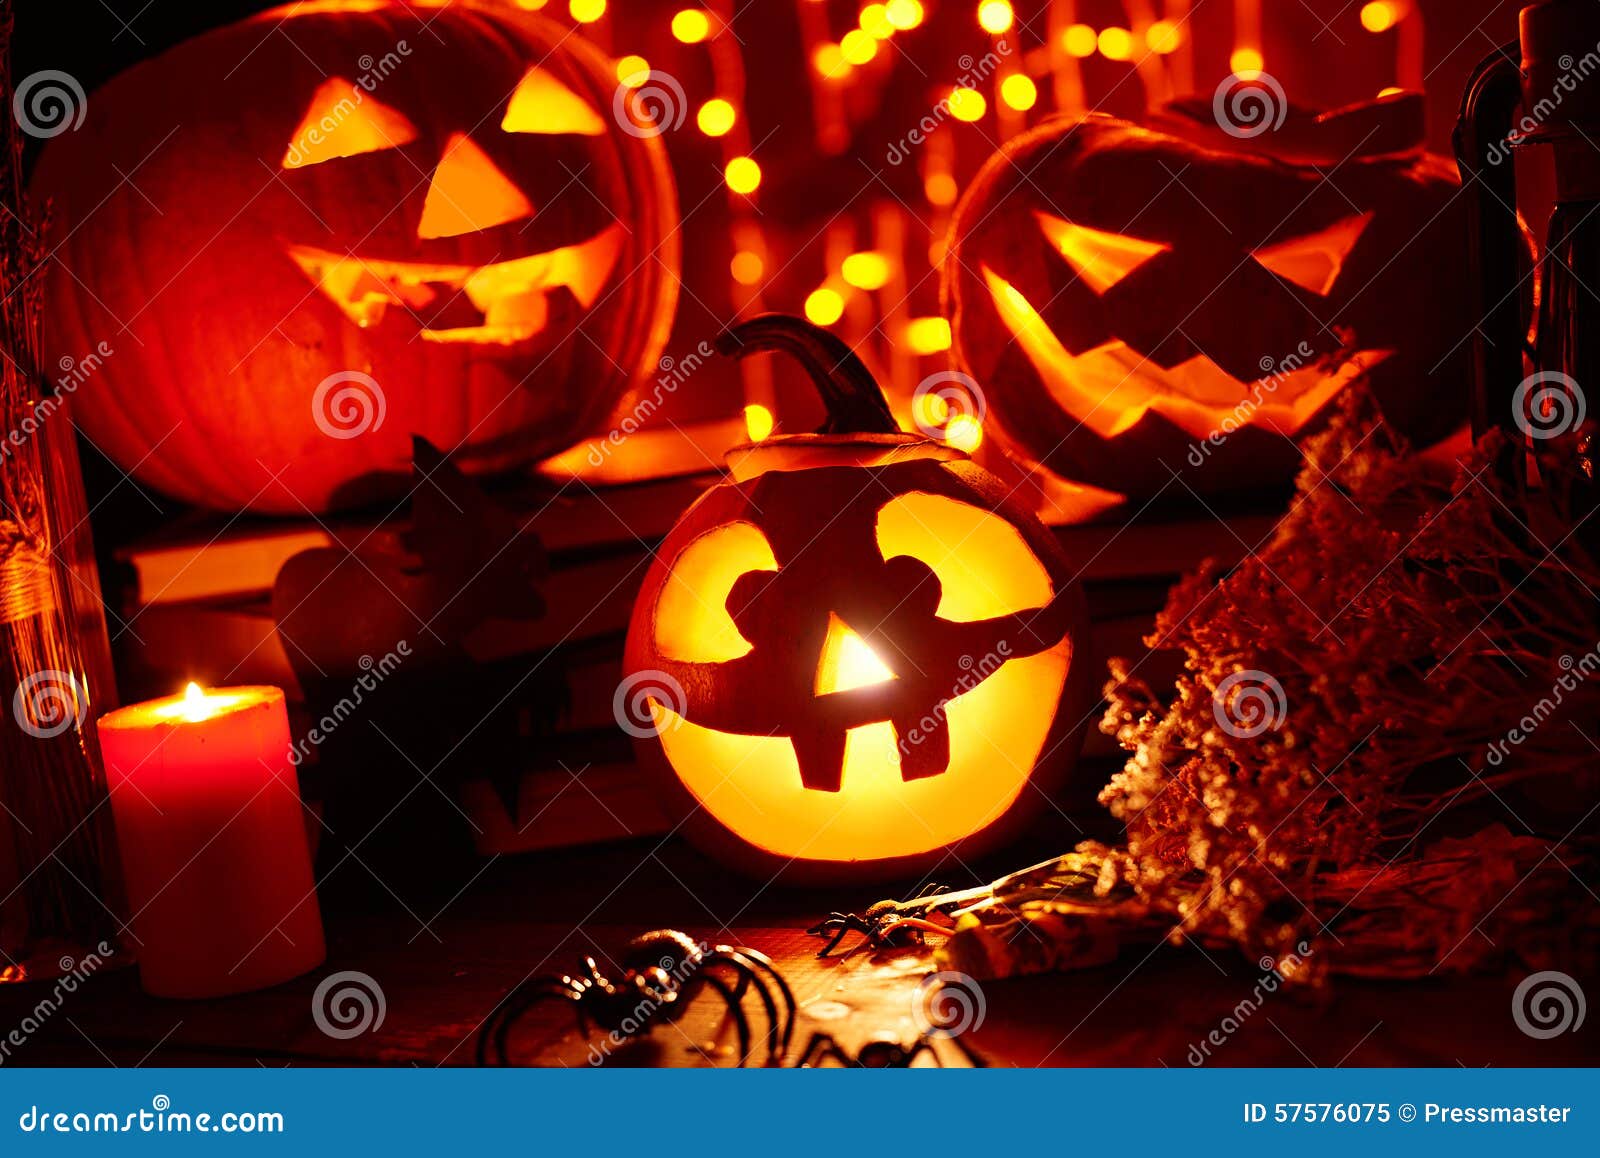 Halloween atmosphere stock image. Image of burning, trick - 57576075